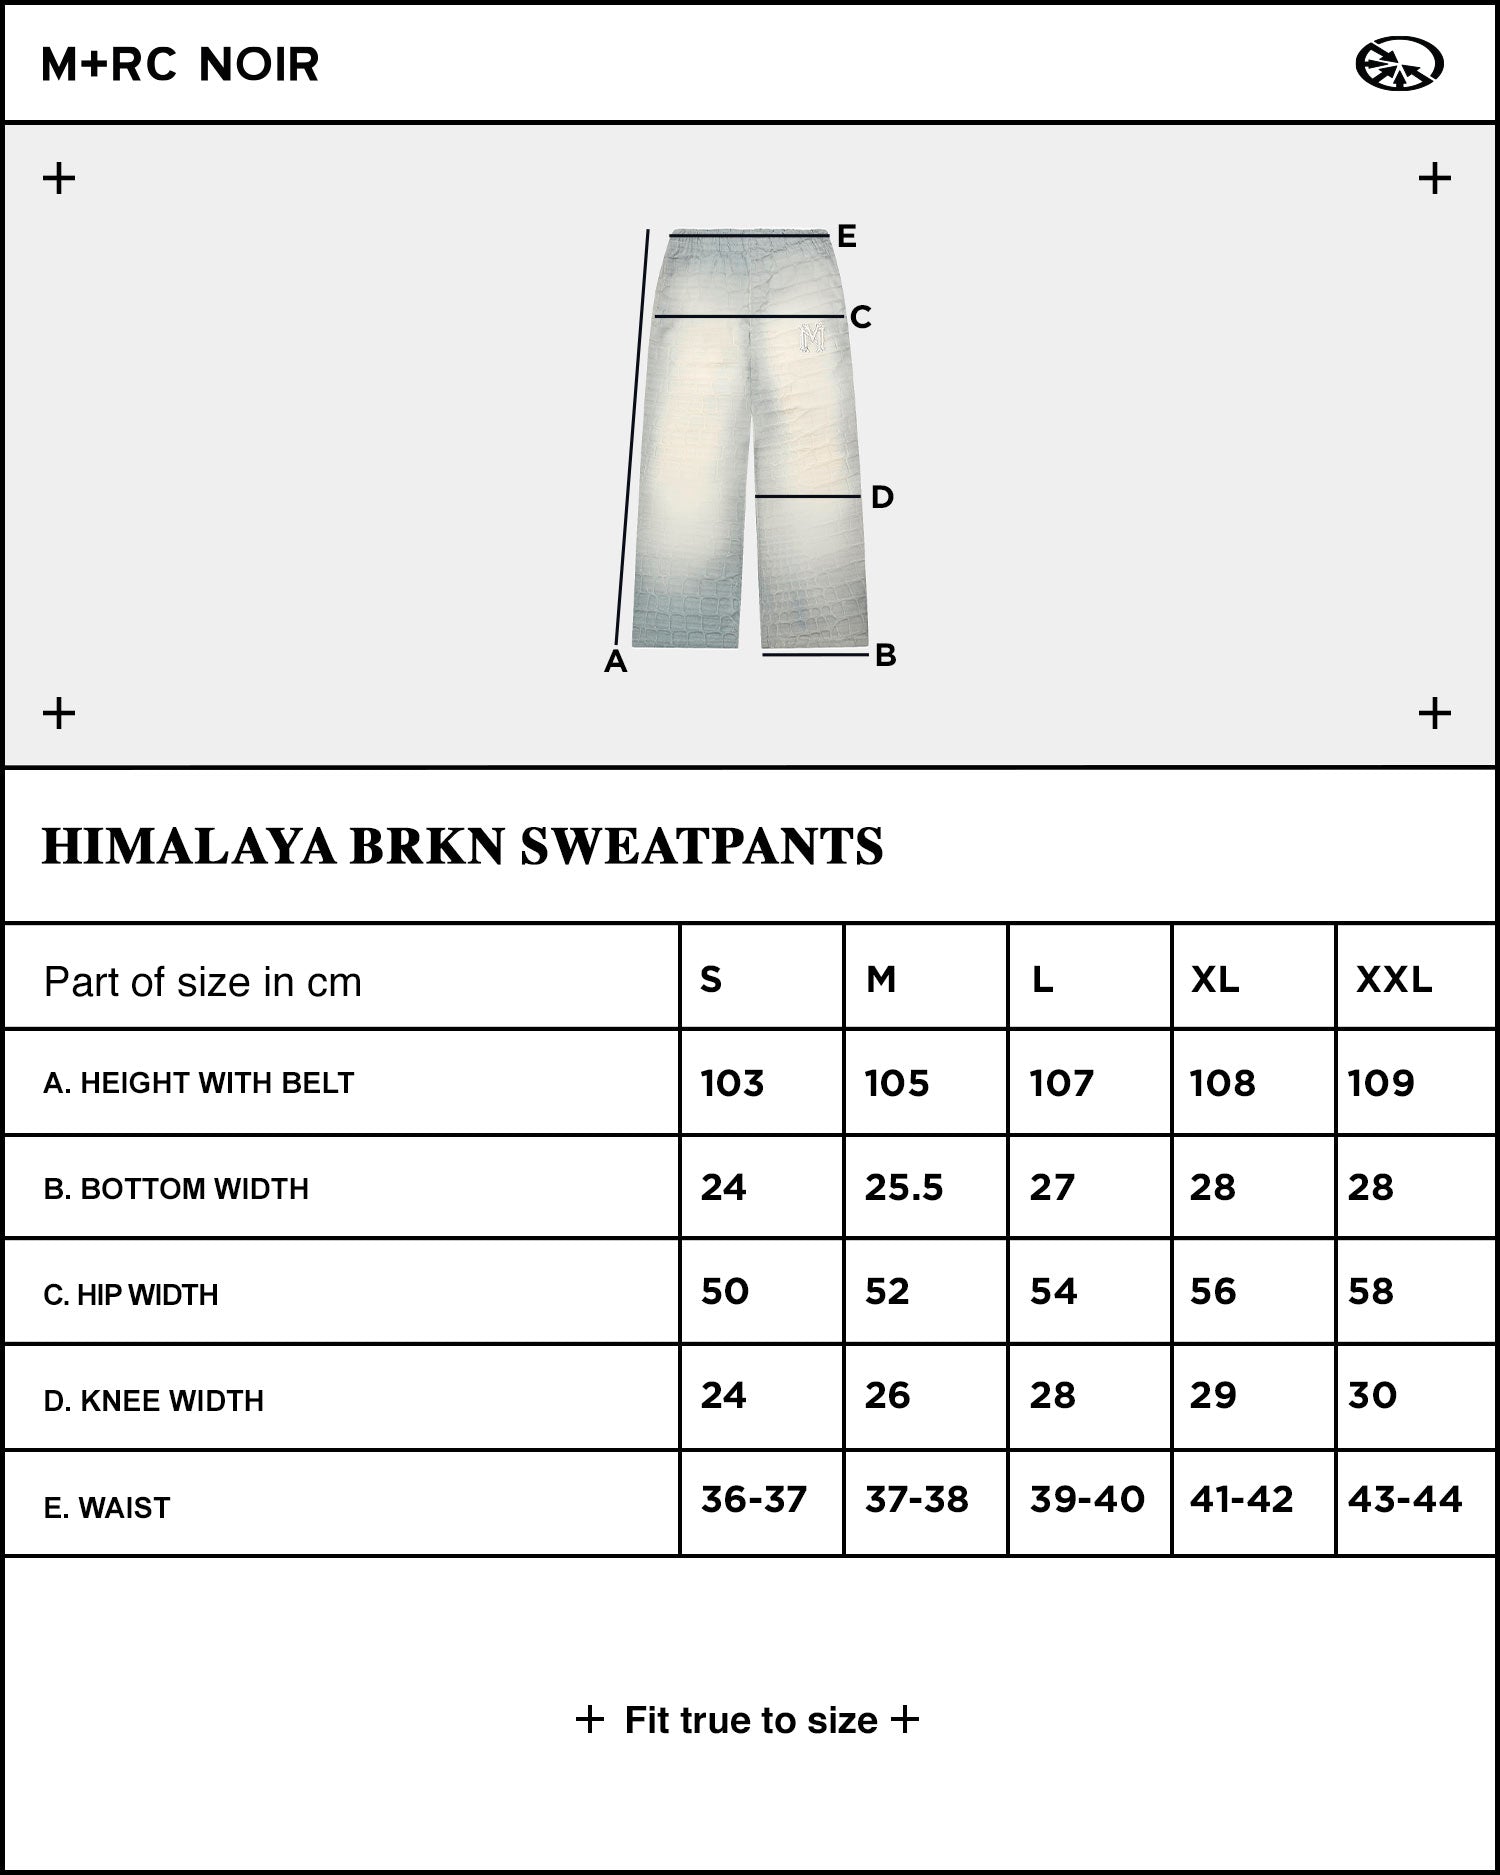 Himalaya BRKN Sweatpants - mrcnoir